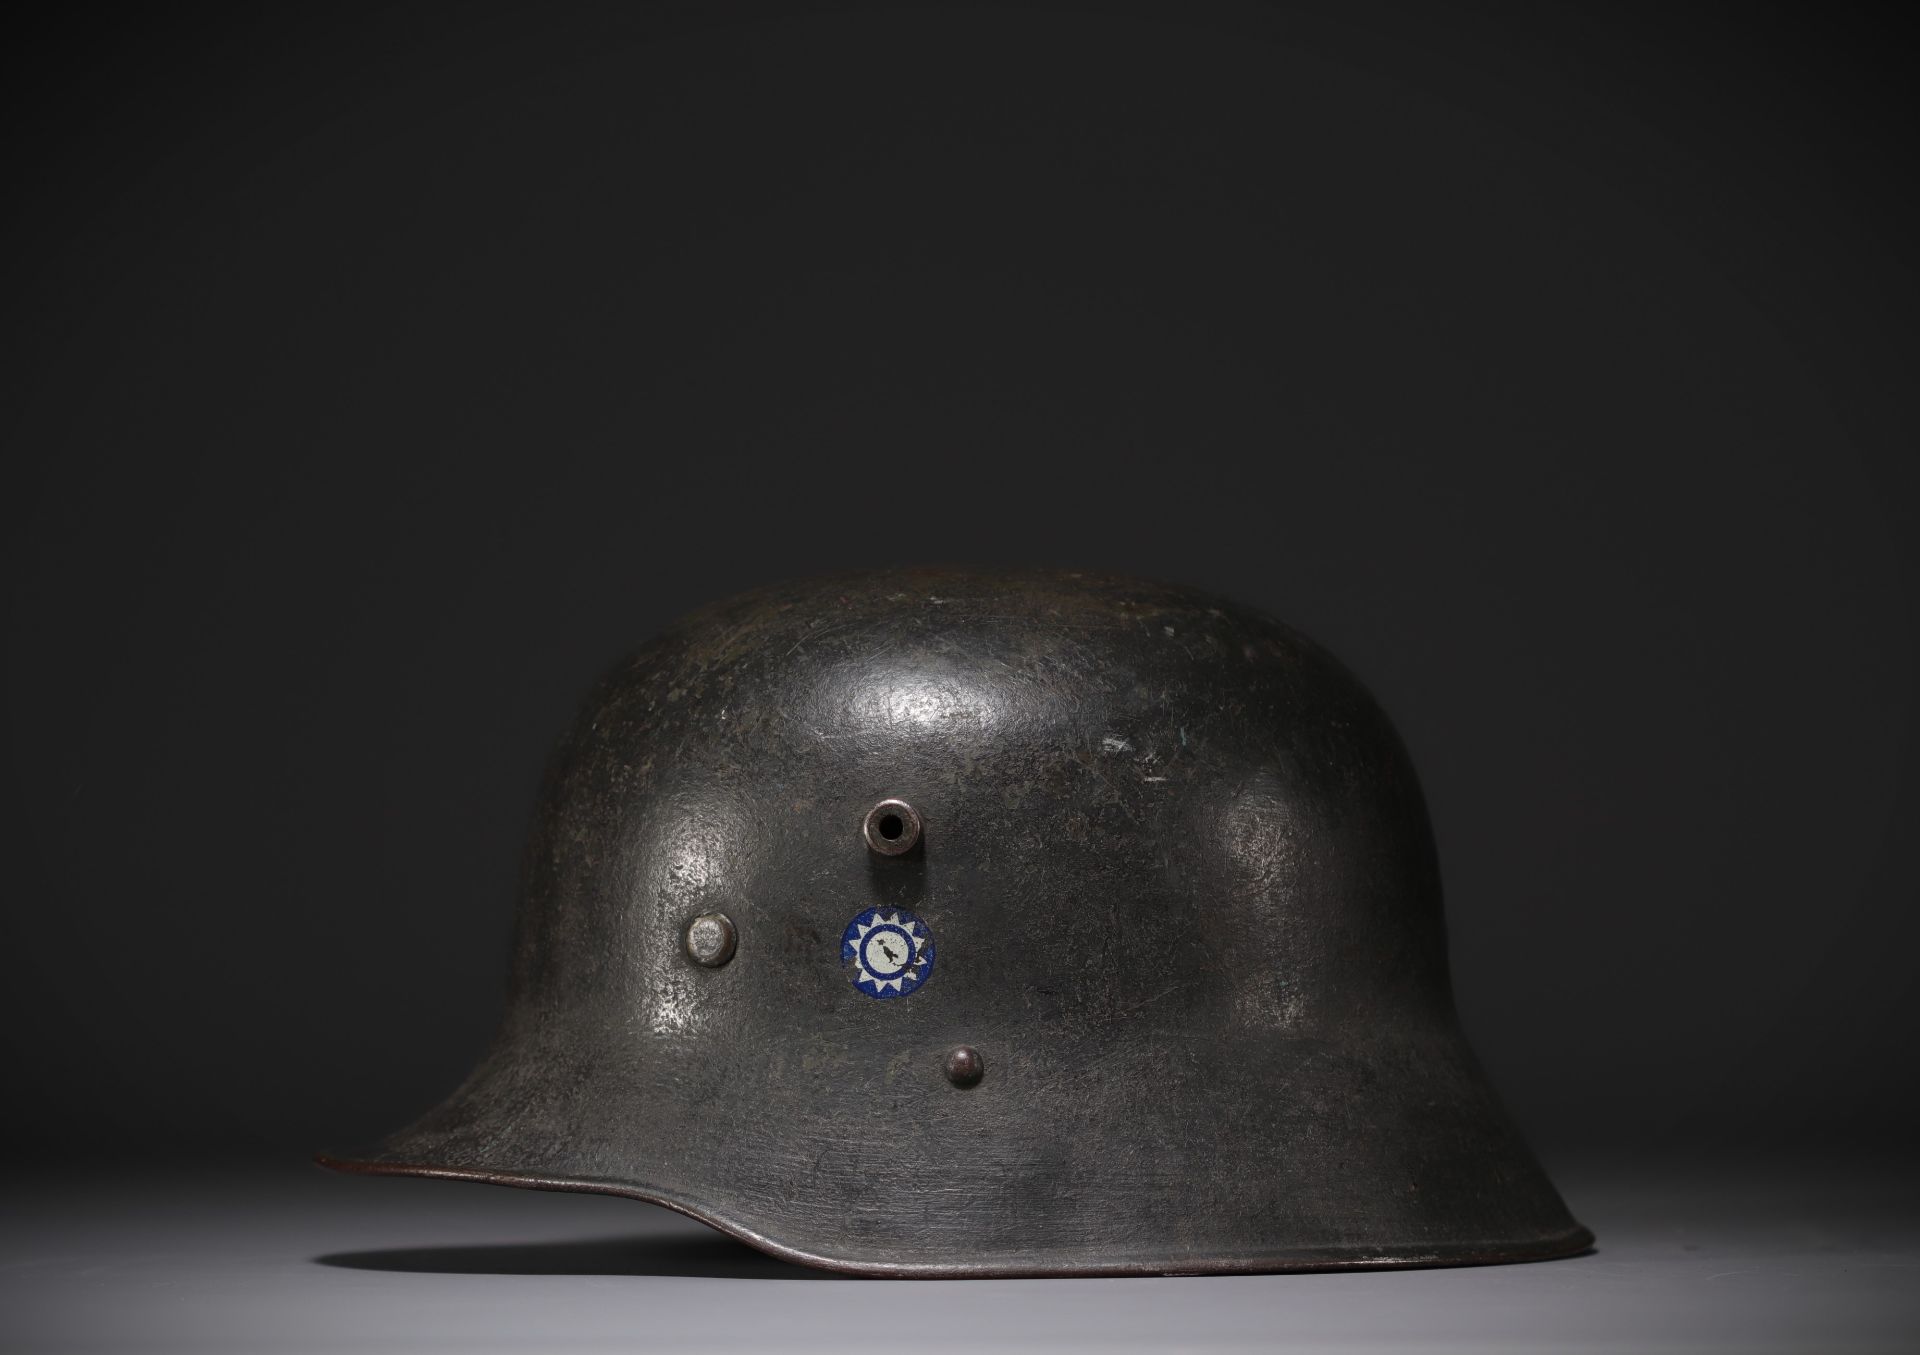 German helmet used by China during Sino-German cooperation. - Image 3 of 4